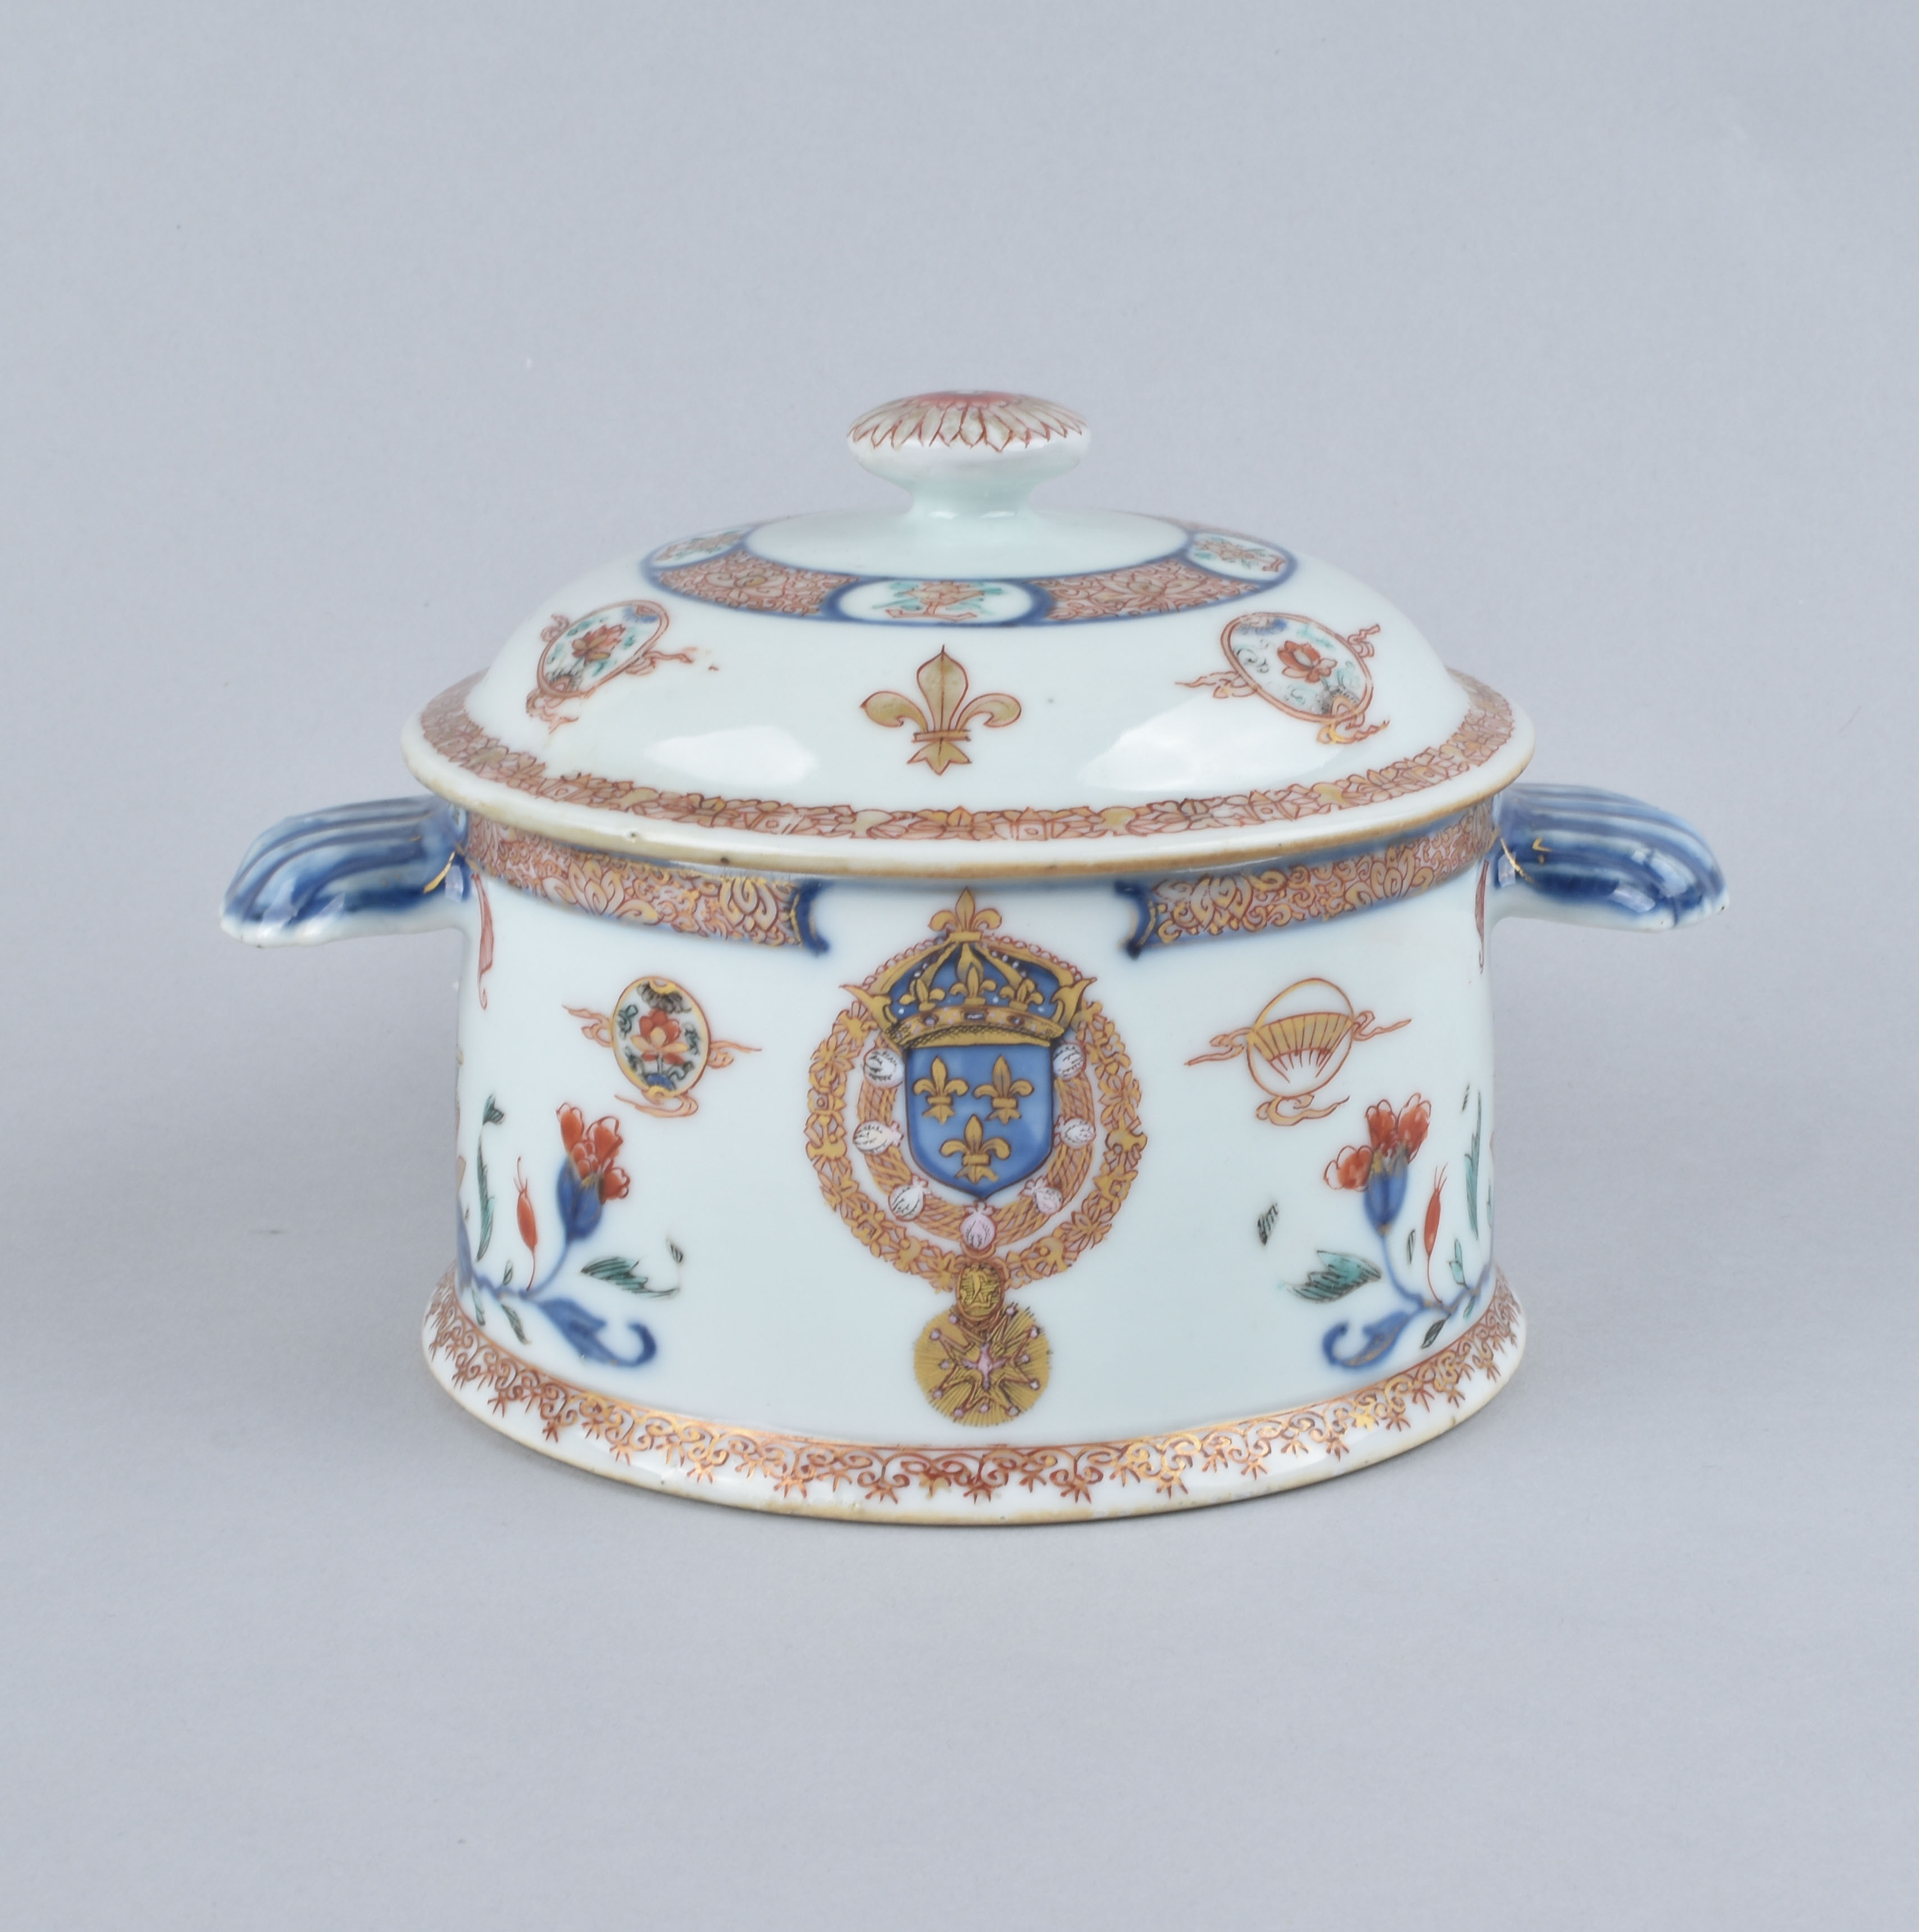 Porcelaine Qianlong (1736-1795), ca. 1738-1740, Chine